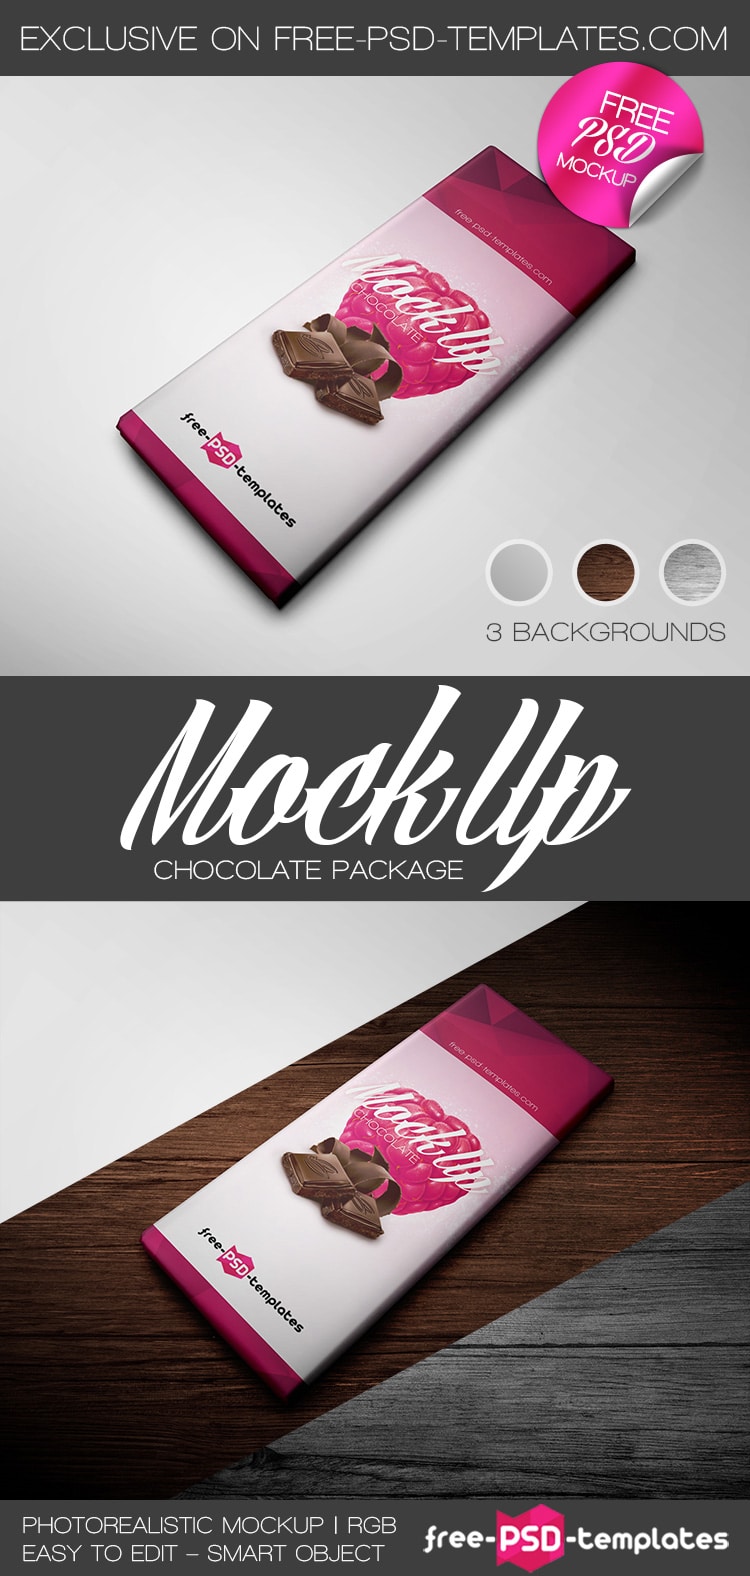 Free chocolate package PSD mockup